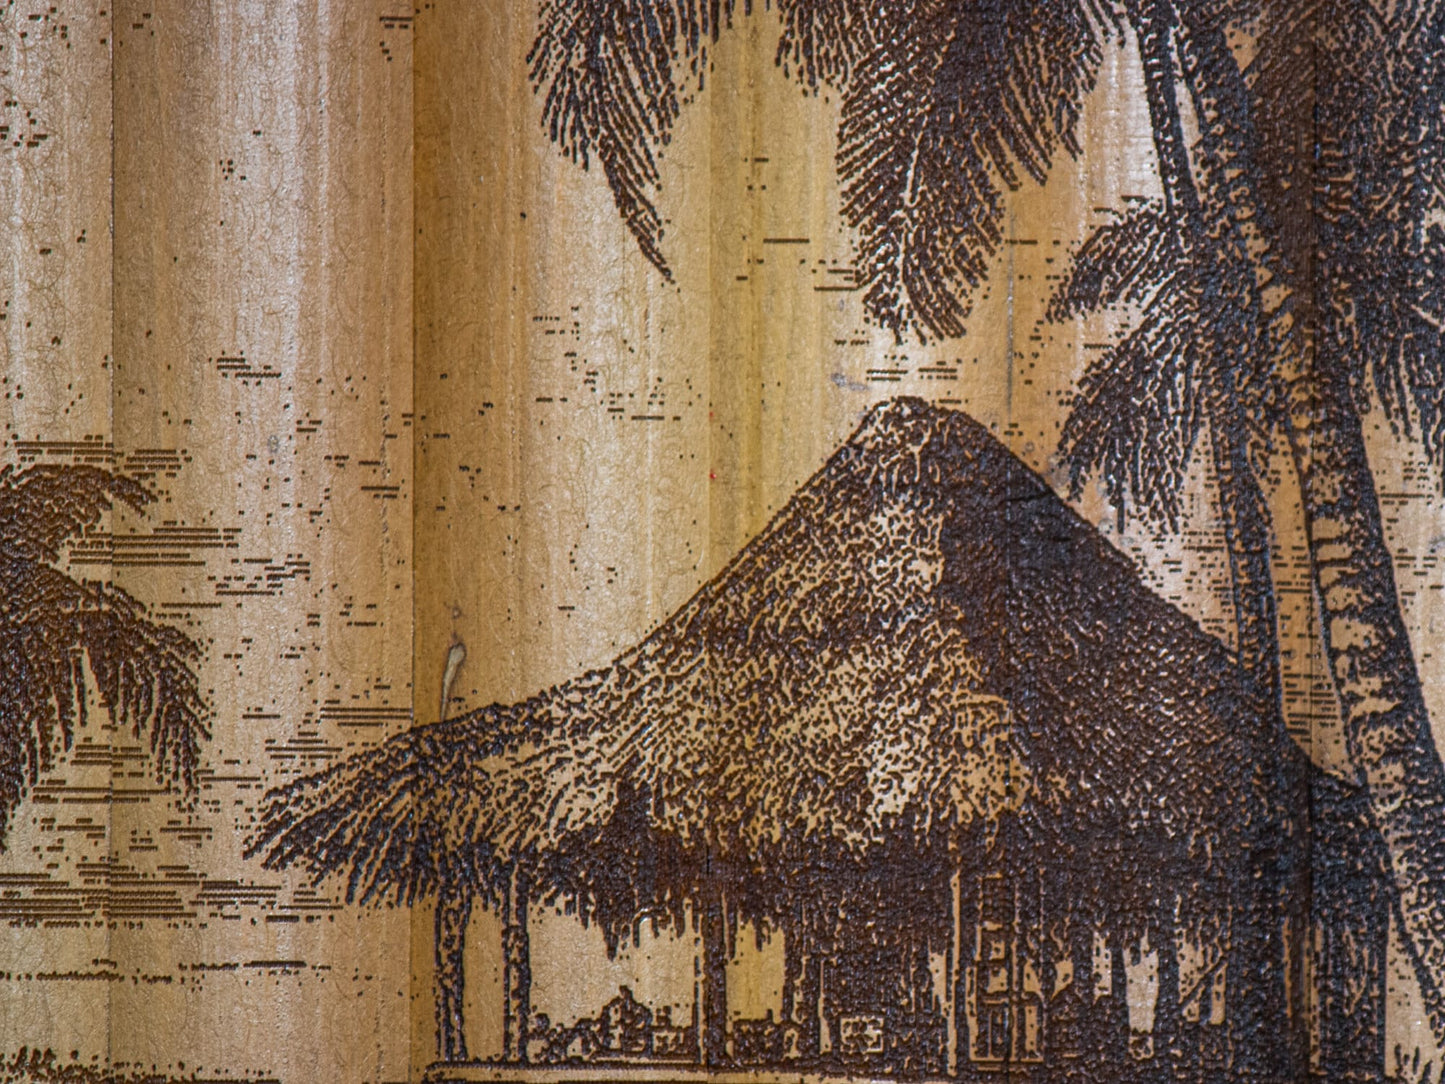 Bamboo Wall Art - Tiki Bar Island v2 - Laser Wood Carving Wall Hanging - Great gift for tiki lovers!